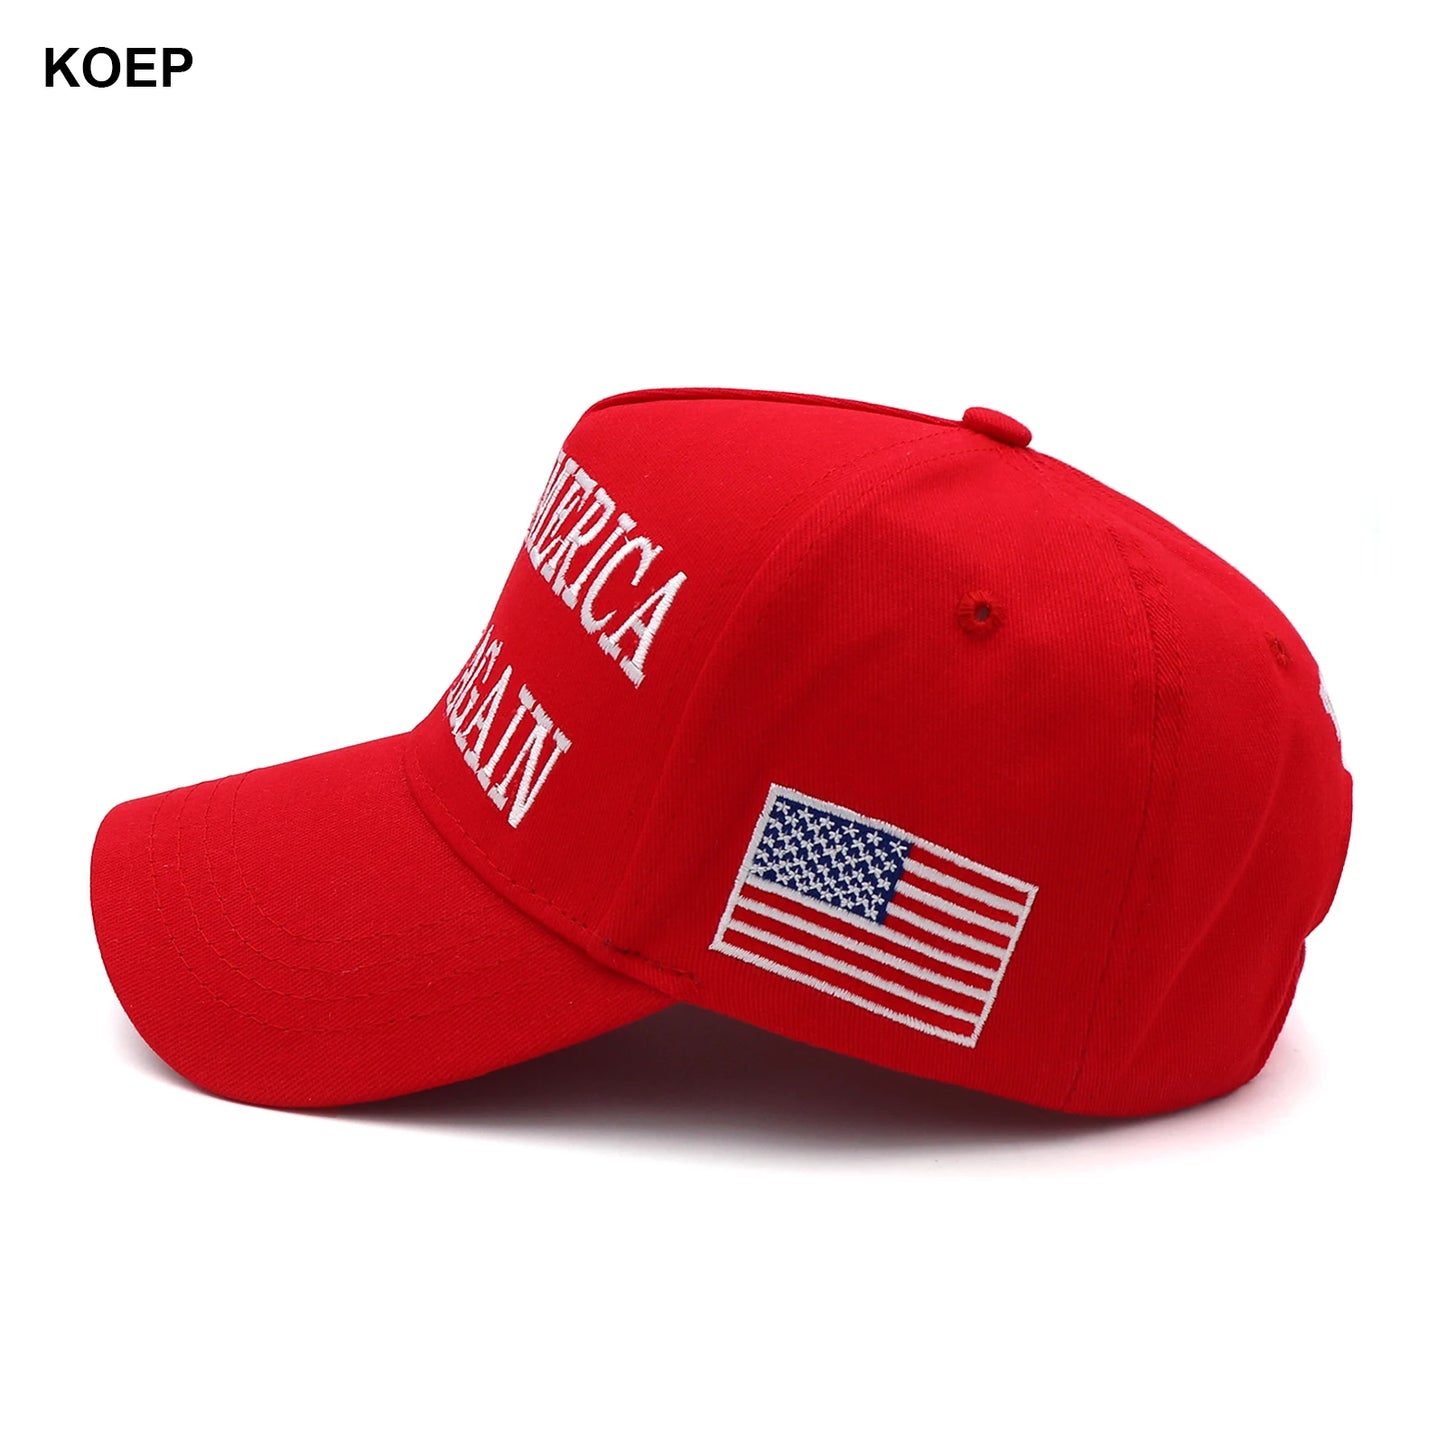 Pro-Trump - Donald Trump 2024 Embroidered Hats - Make America Great Again